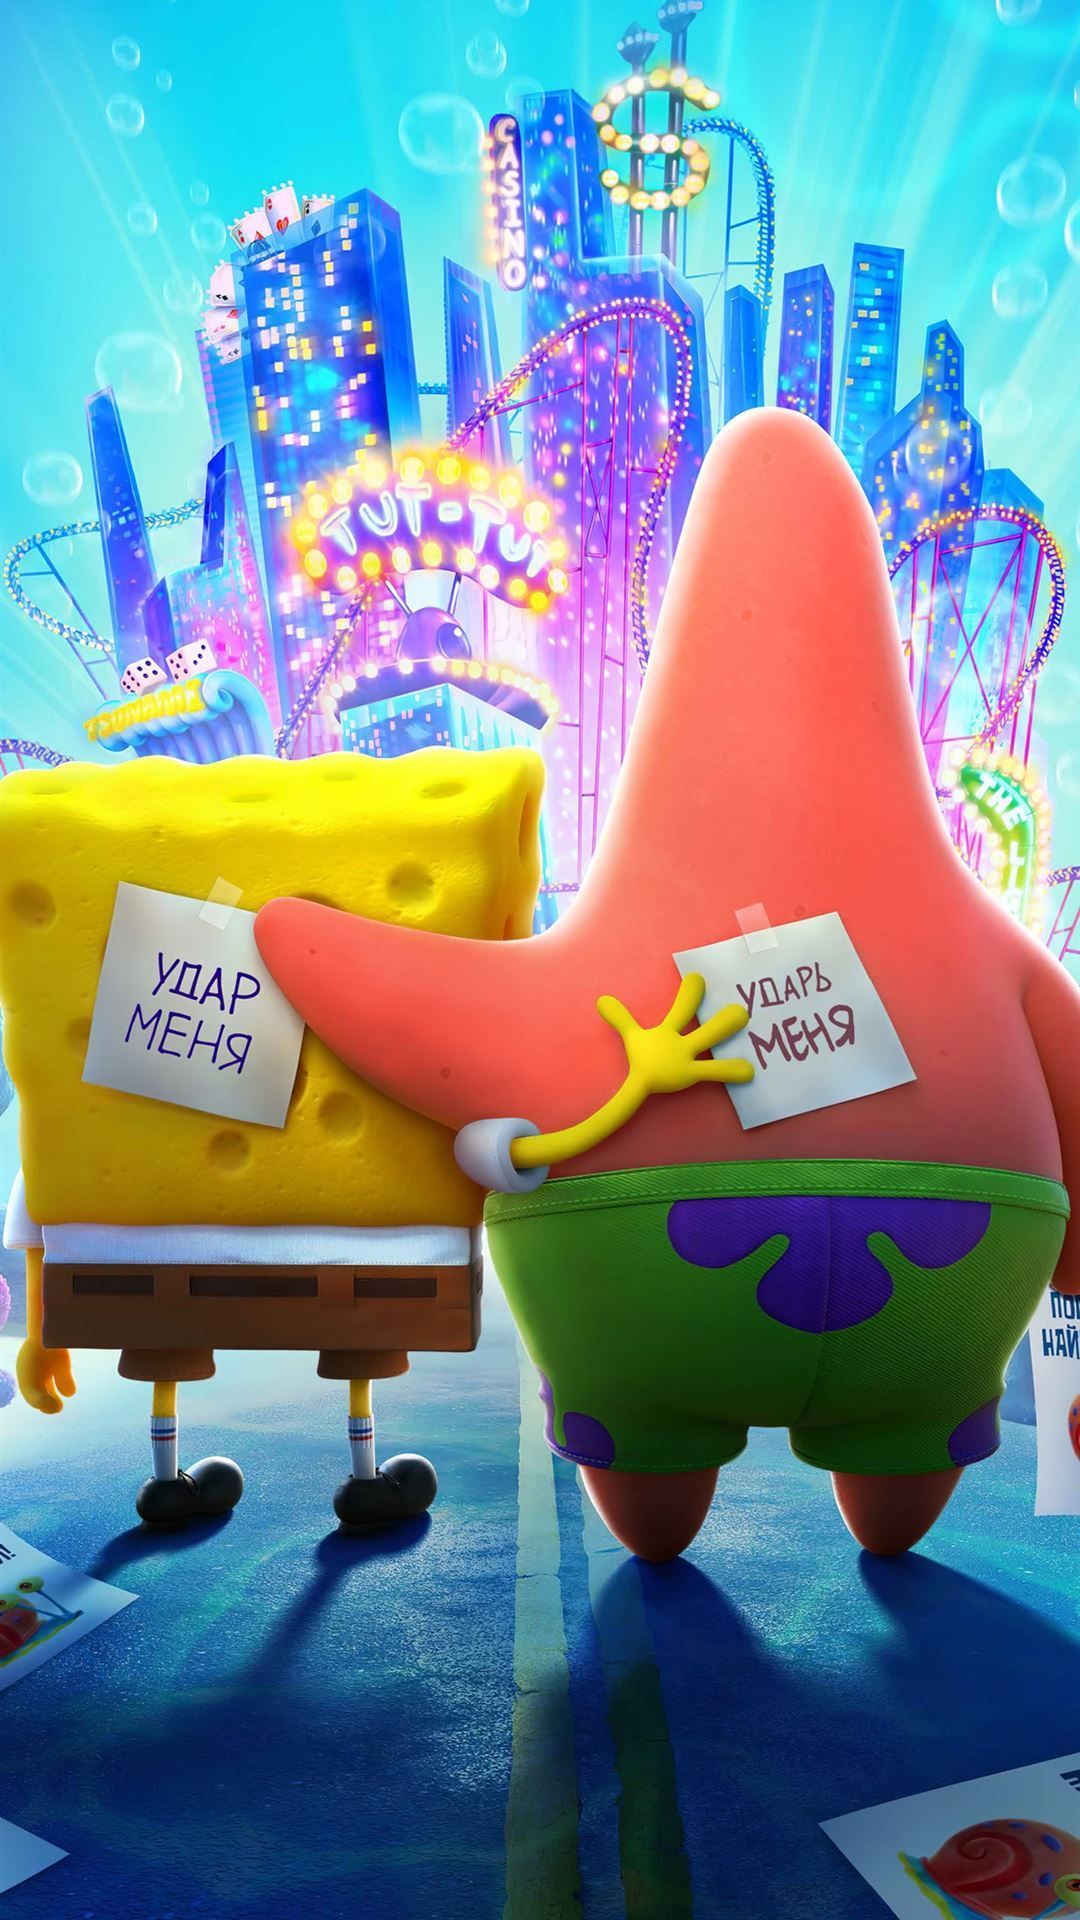 Spongebob squarepants movie 2020 poster wallpaper for mobiles and tablets - SpongeBob